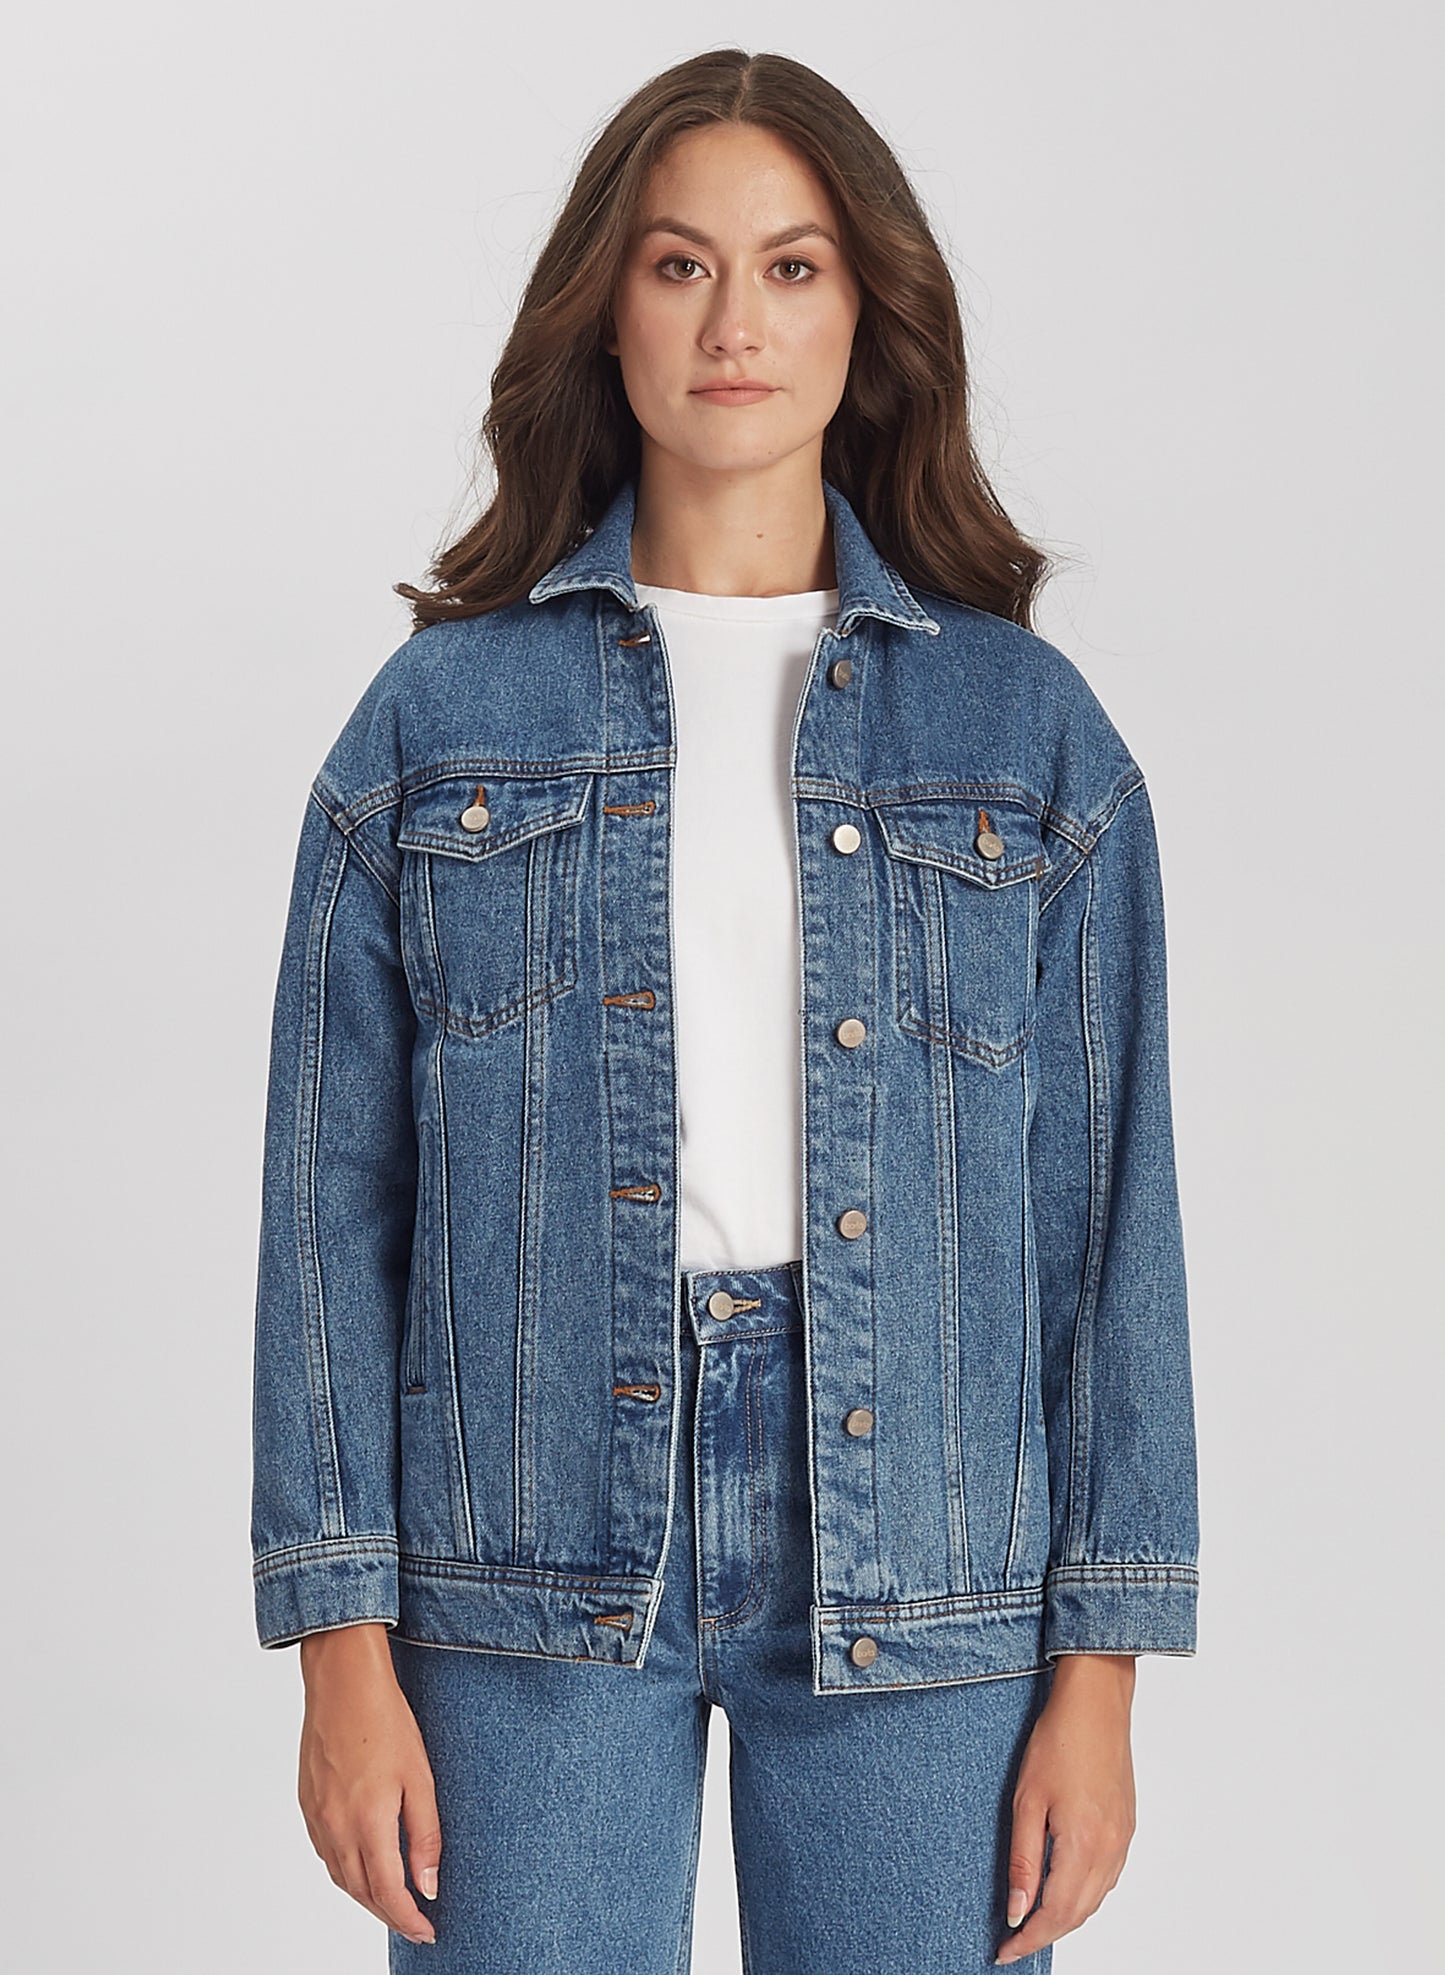 RITA - Oversize Denim Jeans Jacket - Mid Blue